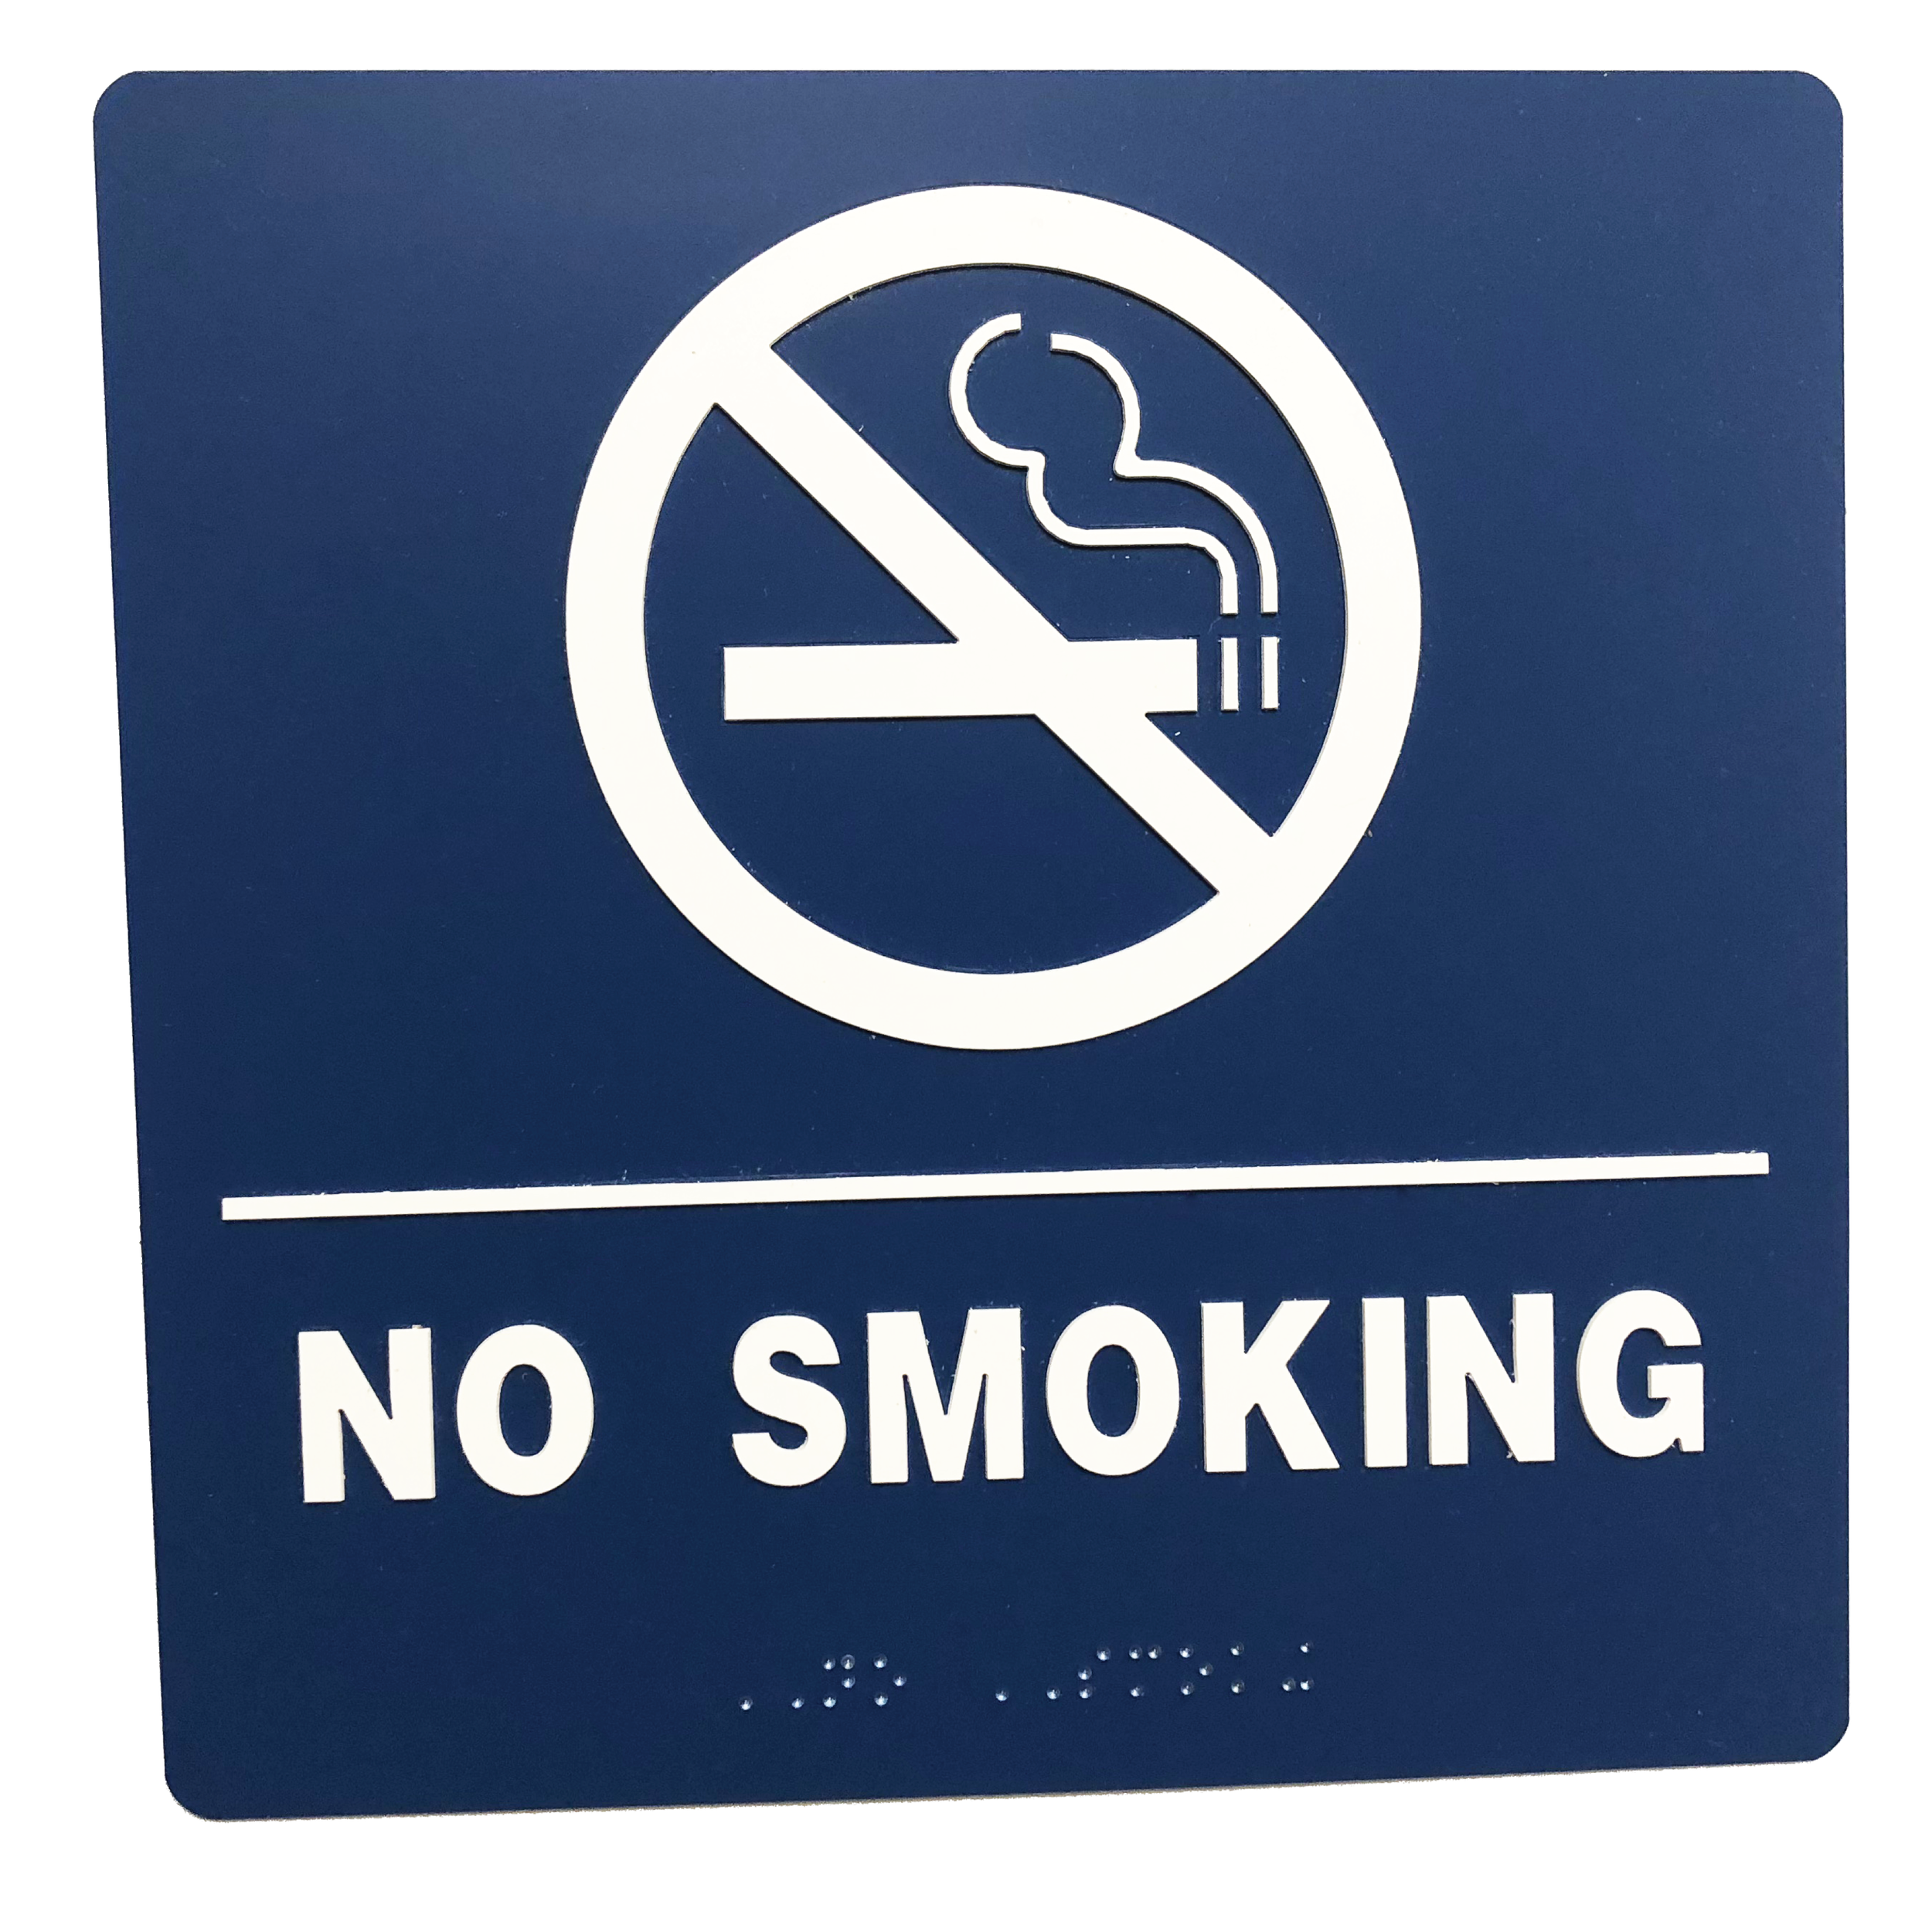 no_smoking.png